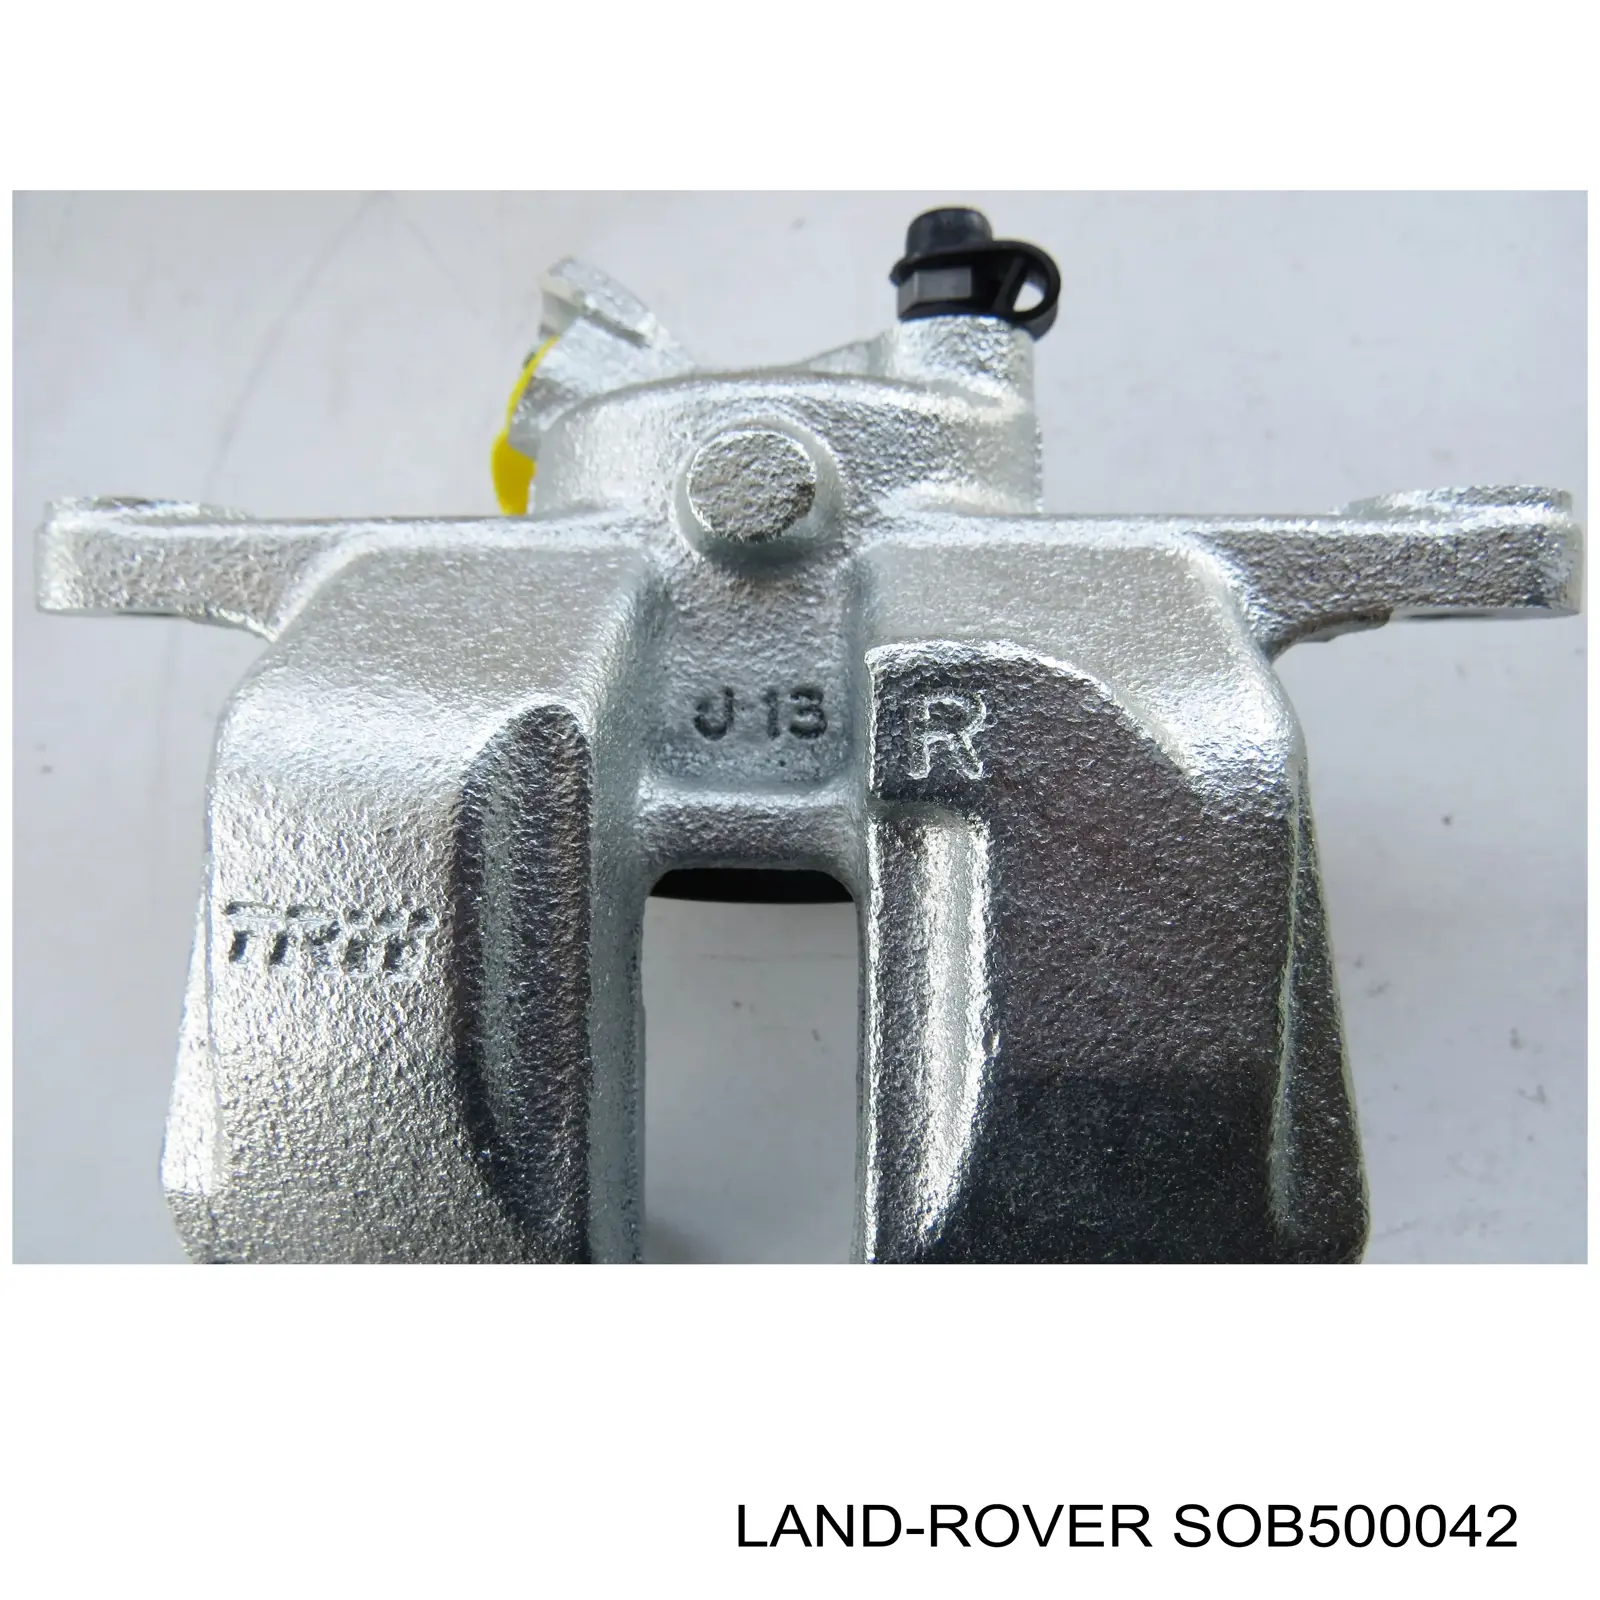 SOB500042 Land Rover pinza de freno trasero derecho